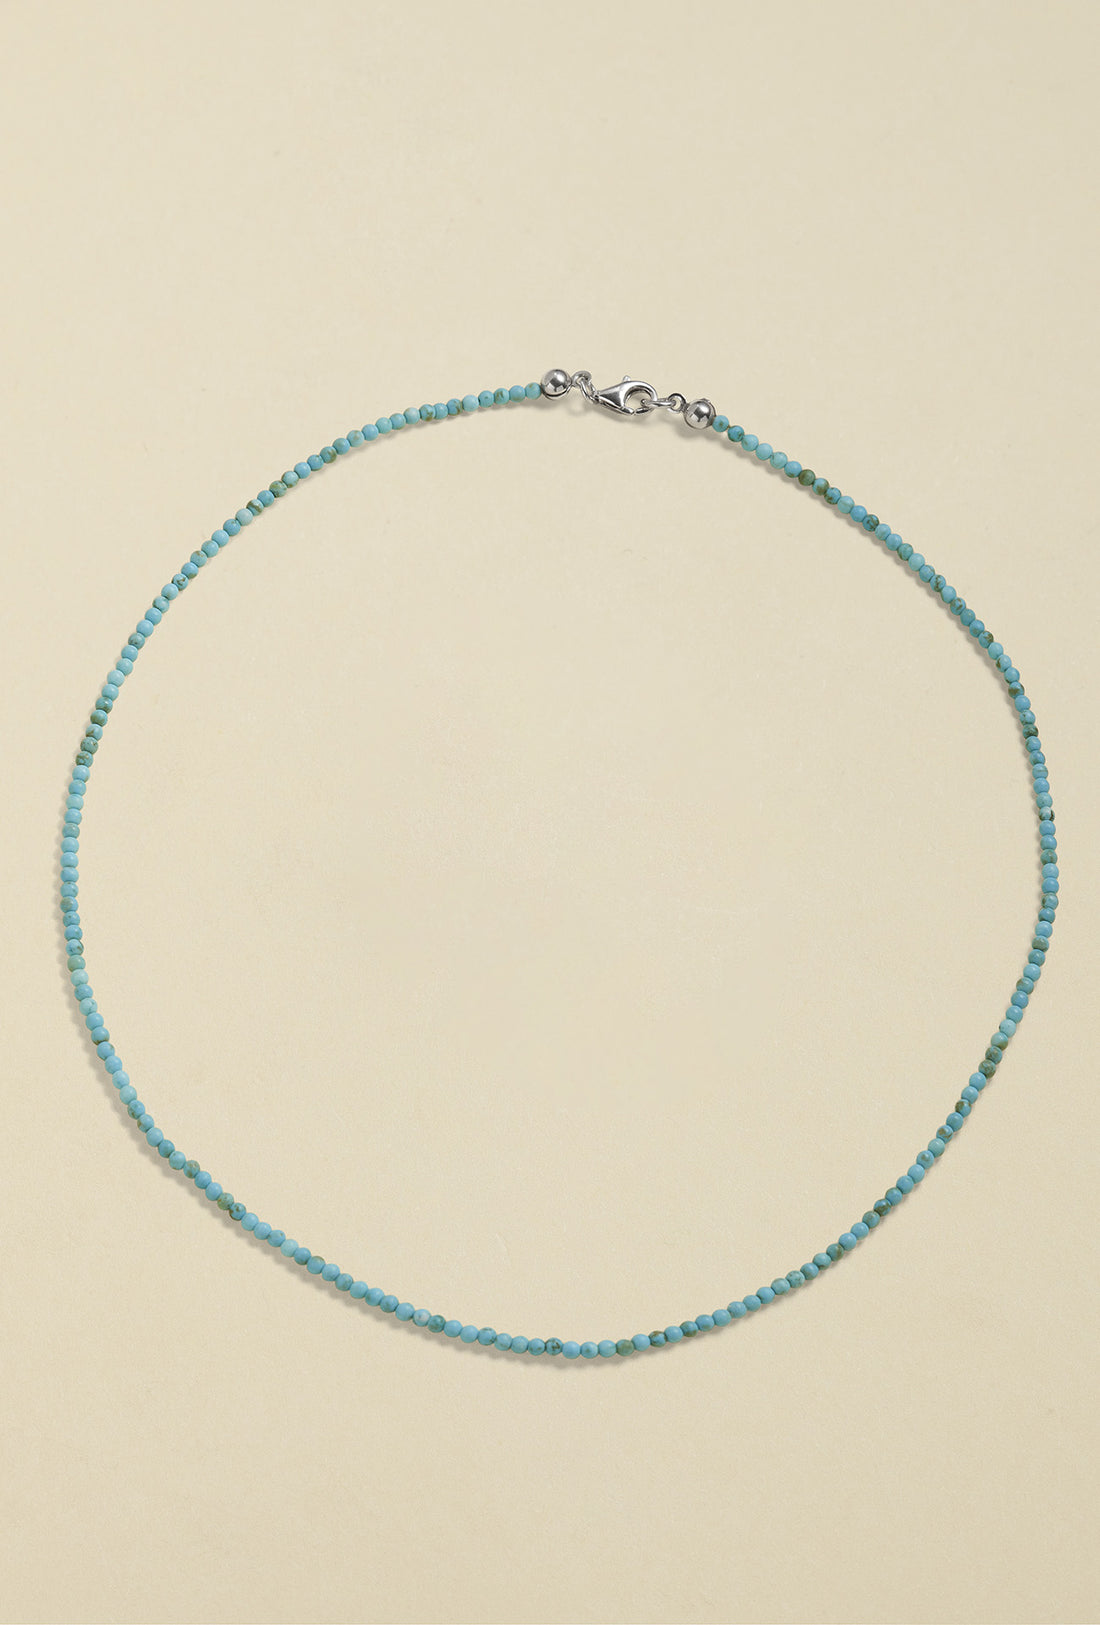 Stone Necklace "Aqua"